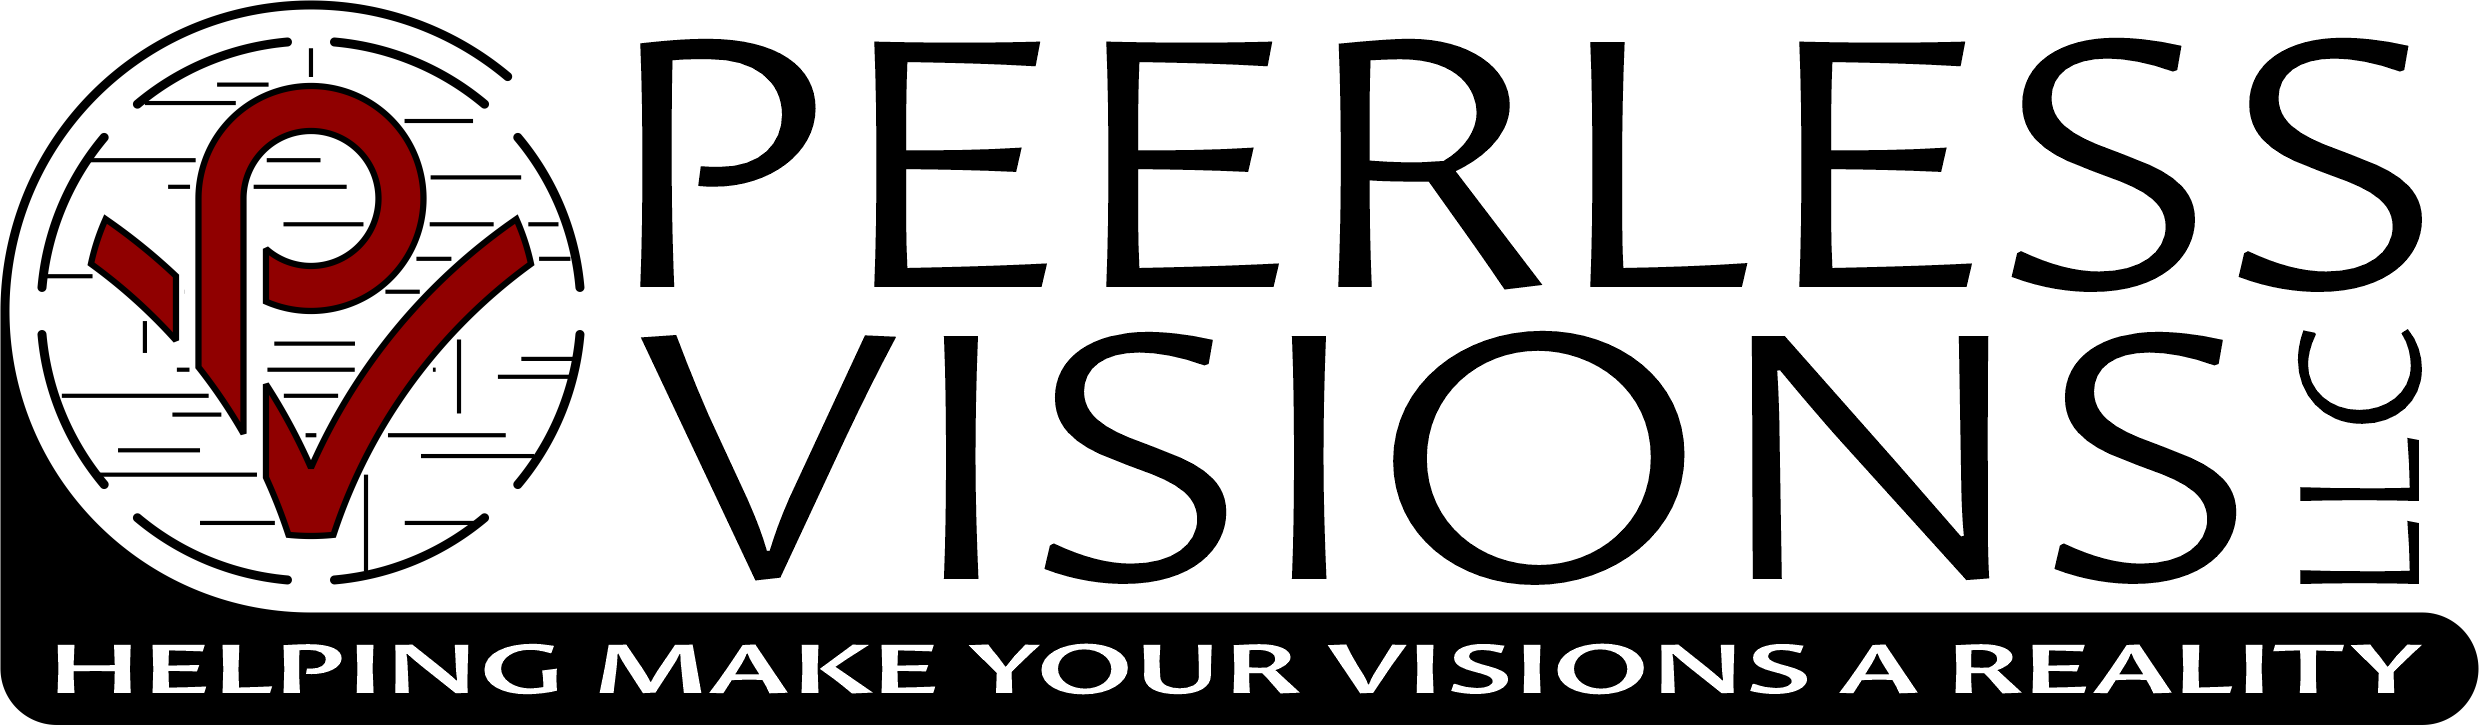 Peerless Visions LLC logo